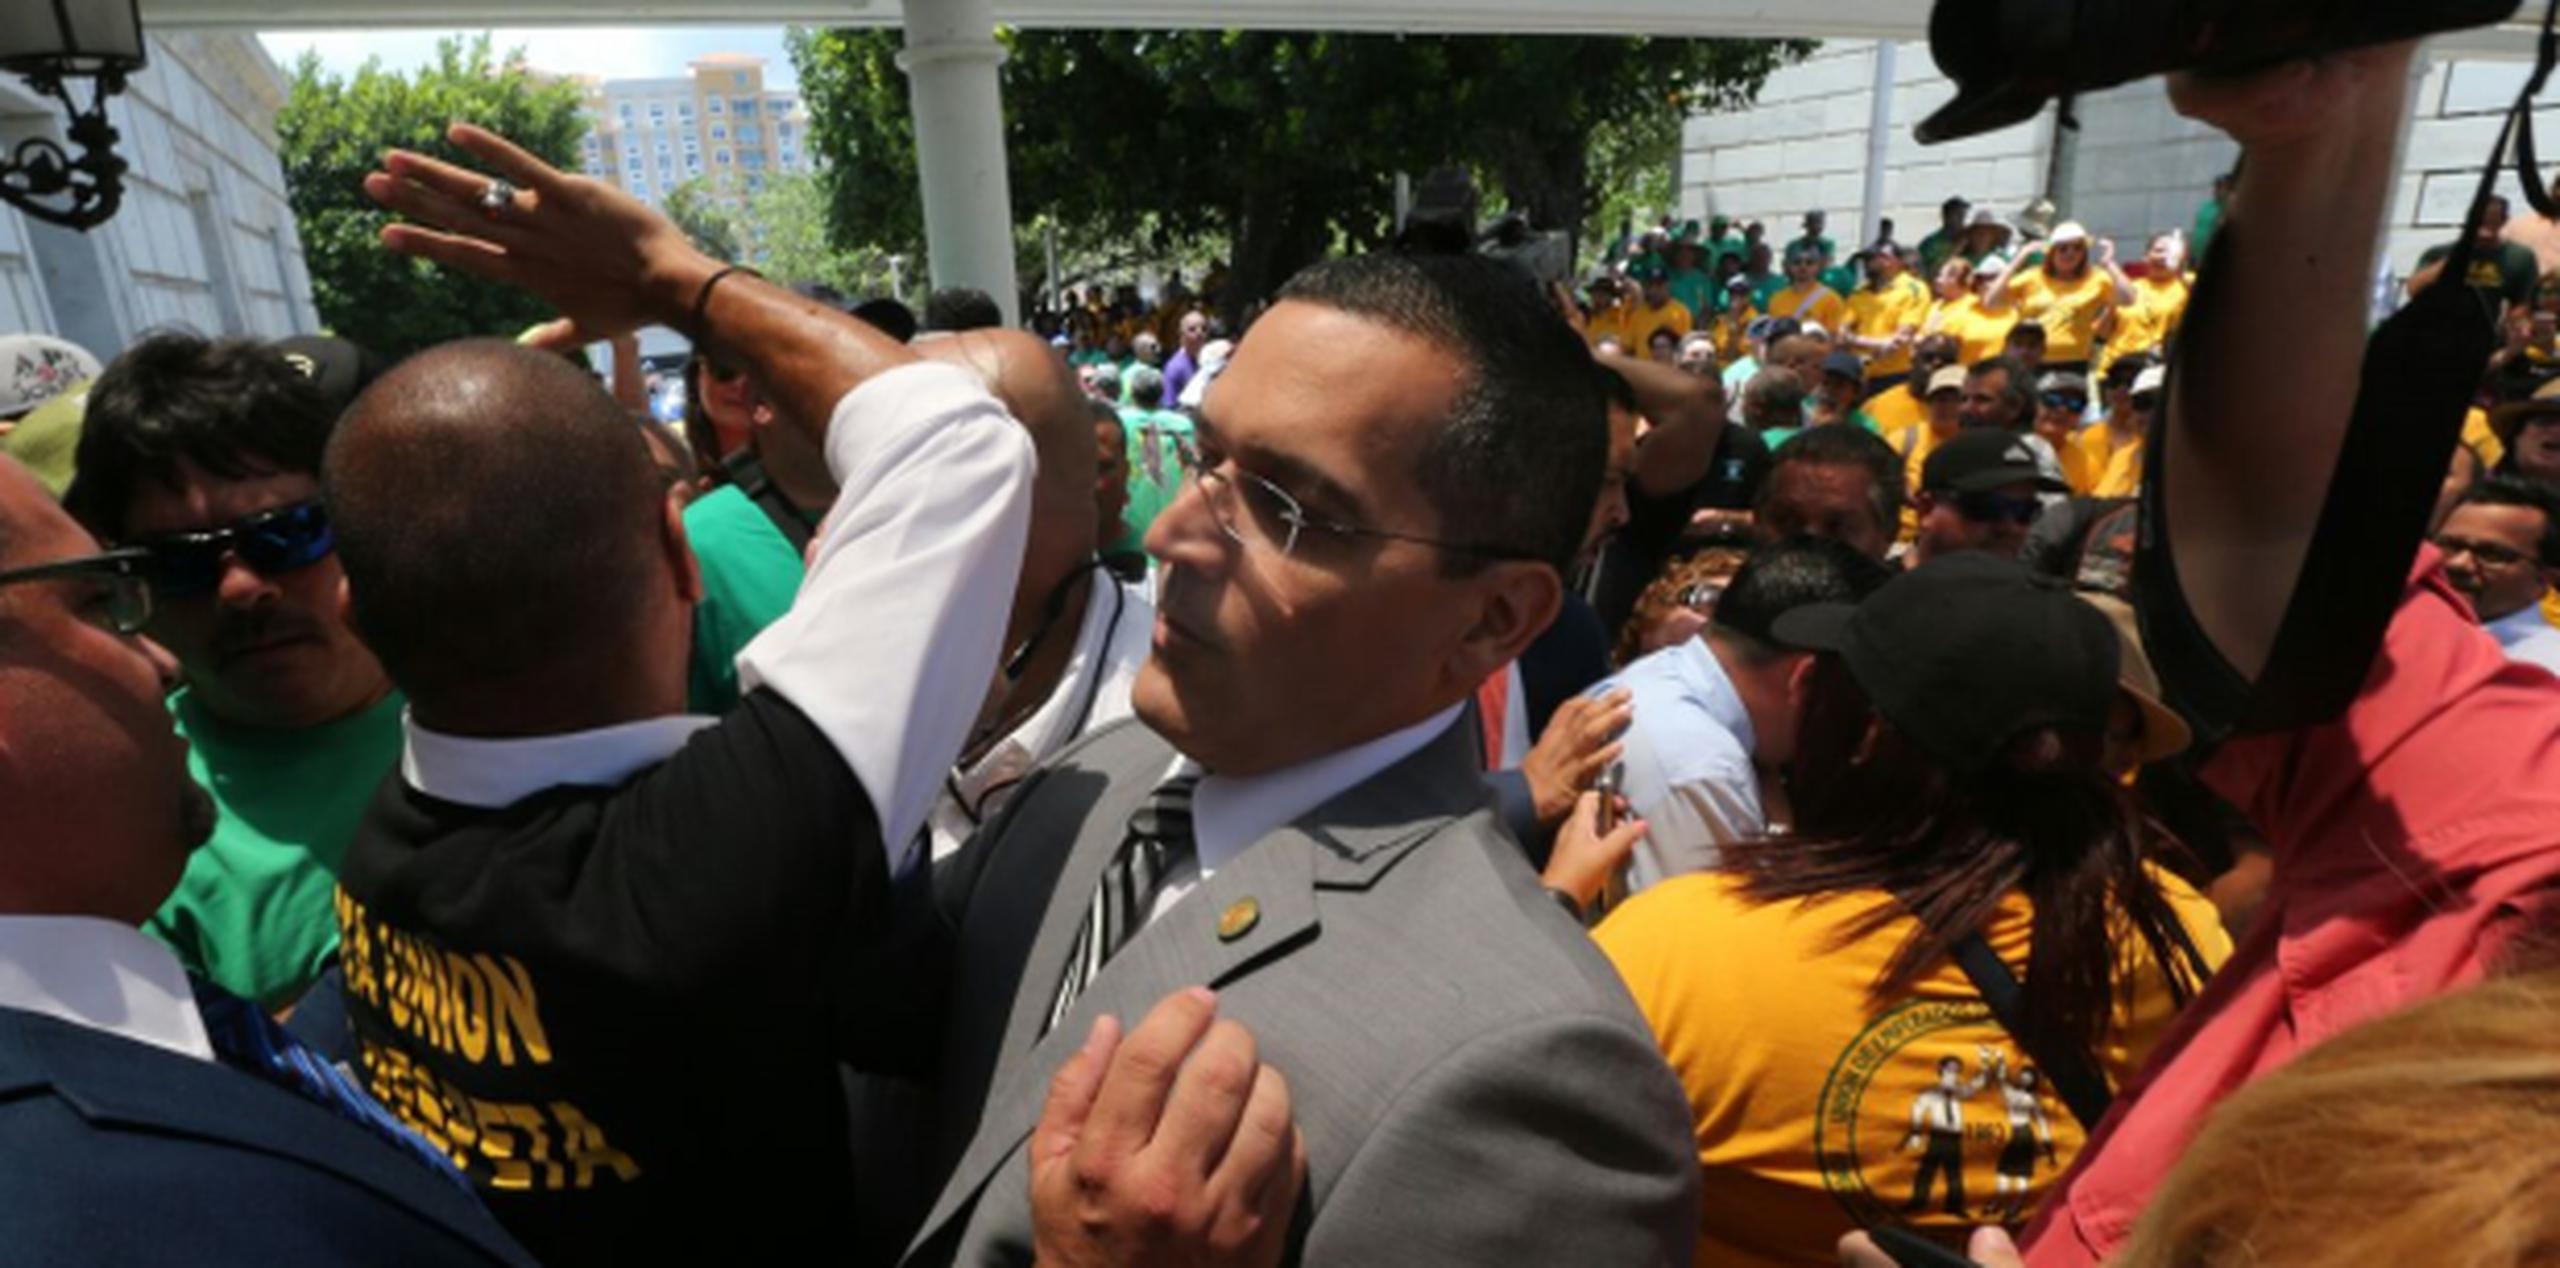 Momento en que el representante José Enrique "Quiquito" Meléndez trata de entrar al Capitolio. (juan.martinez@gfrmedia.com)